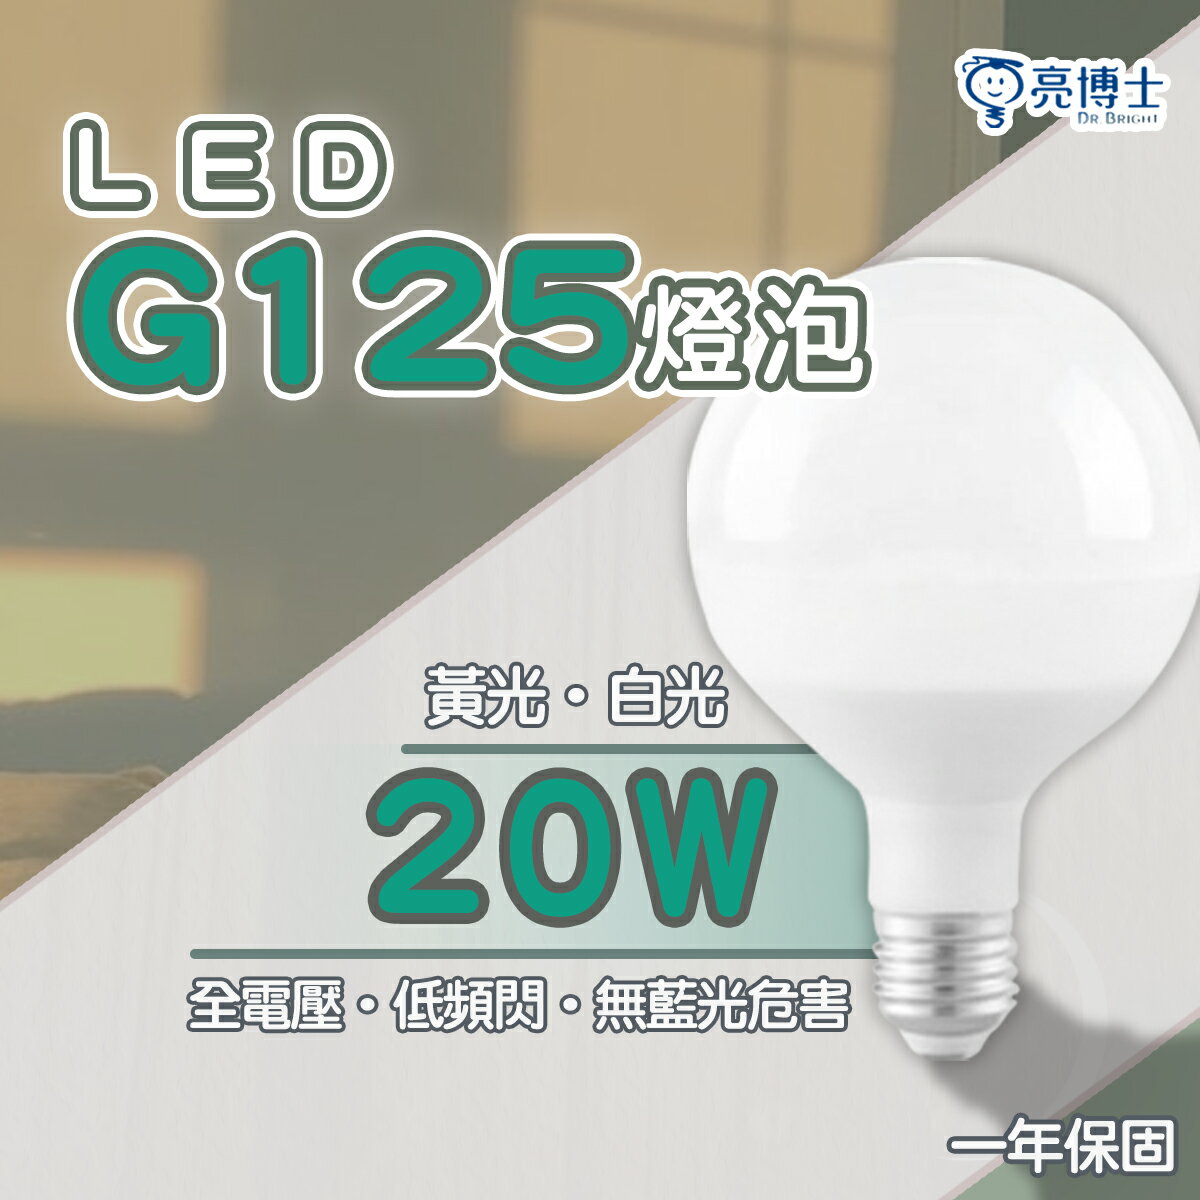 〖亮博士〗LED 珍珠燈 G125 20W 全電壓 白光/黃光〖永光照明〗DR-REC-LED-20W-G125